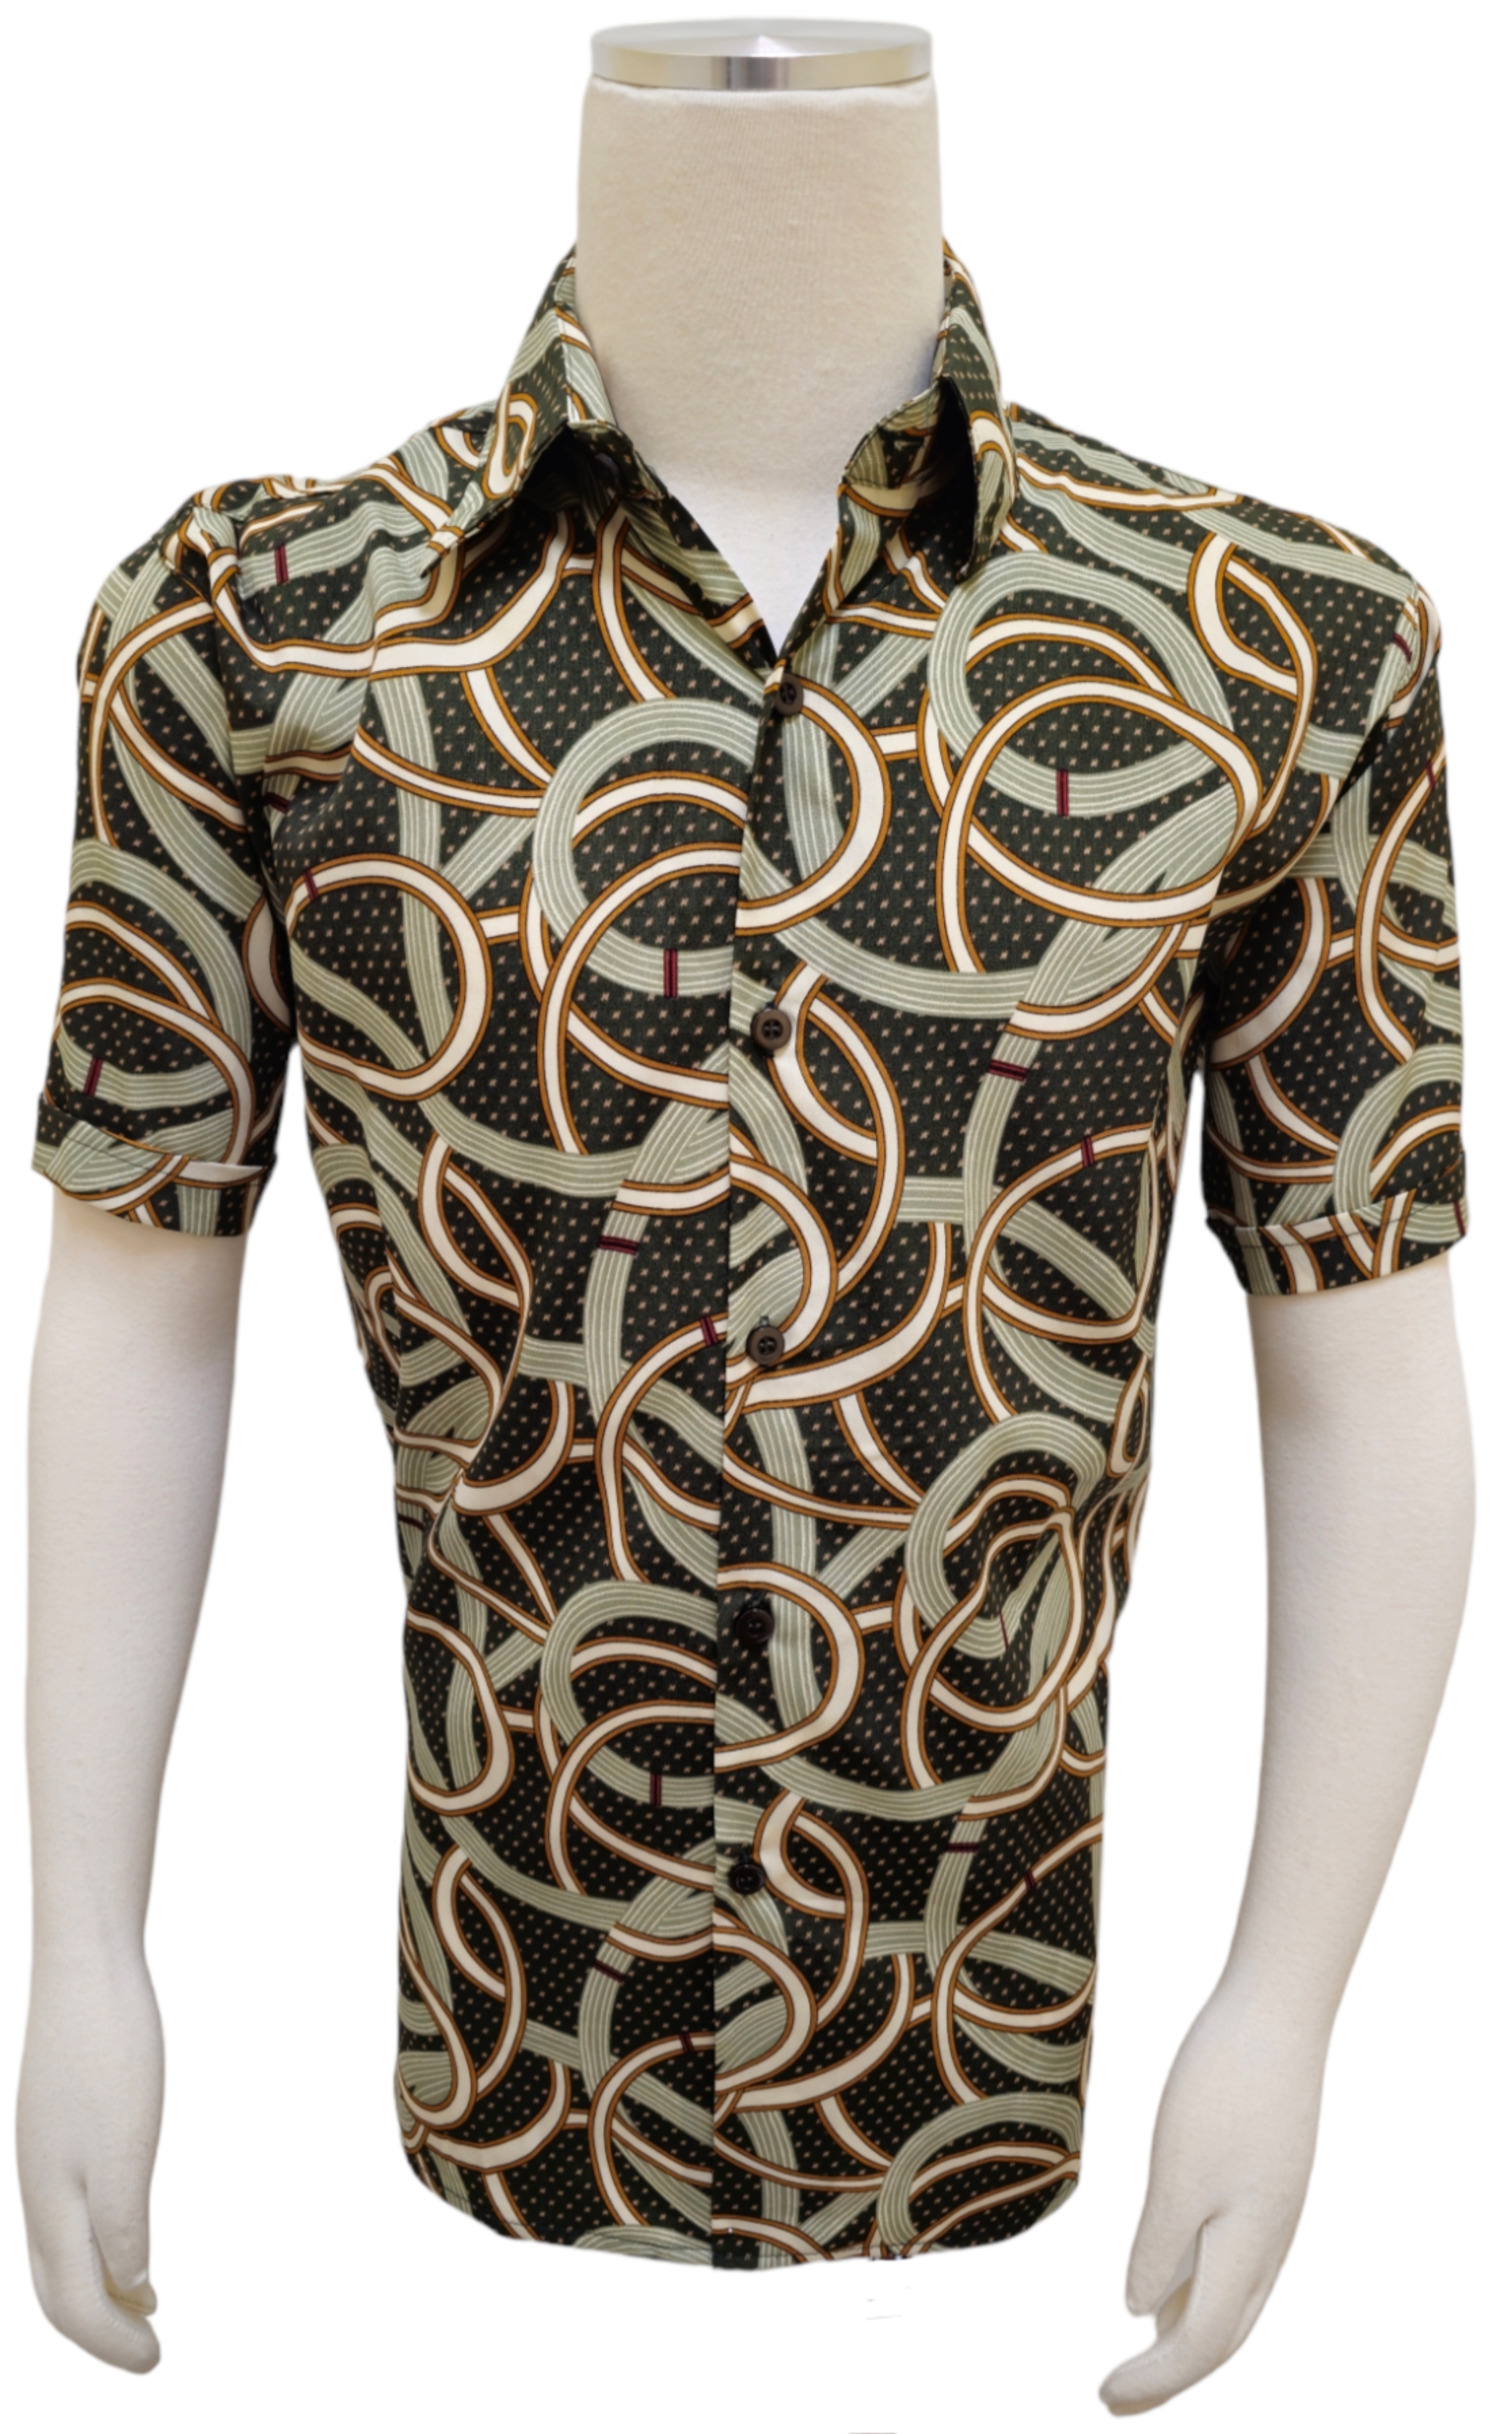 Pronti Olive Green / Cognac / Cream Abstract Design Short Sleeve Shirt S6668